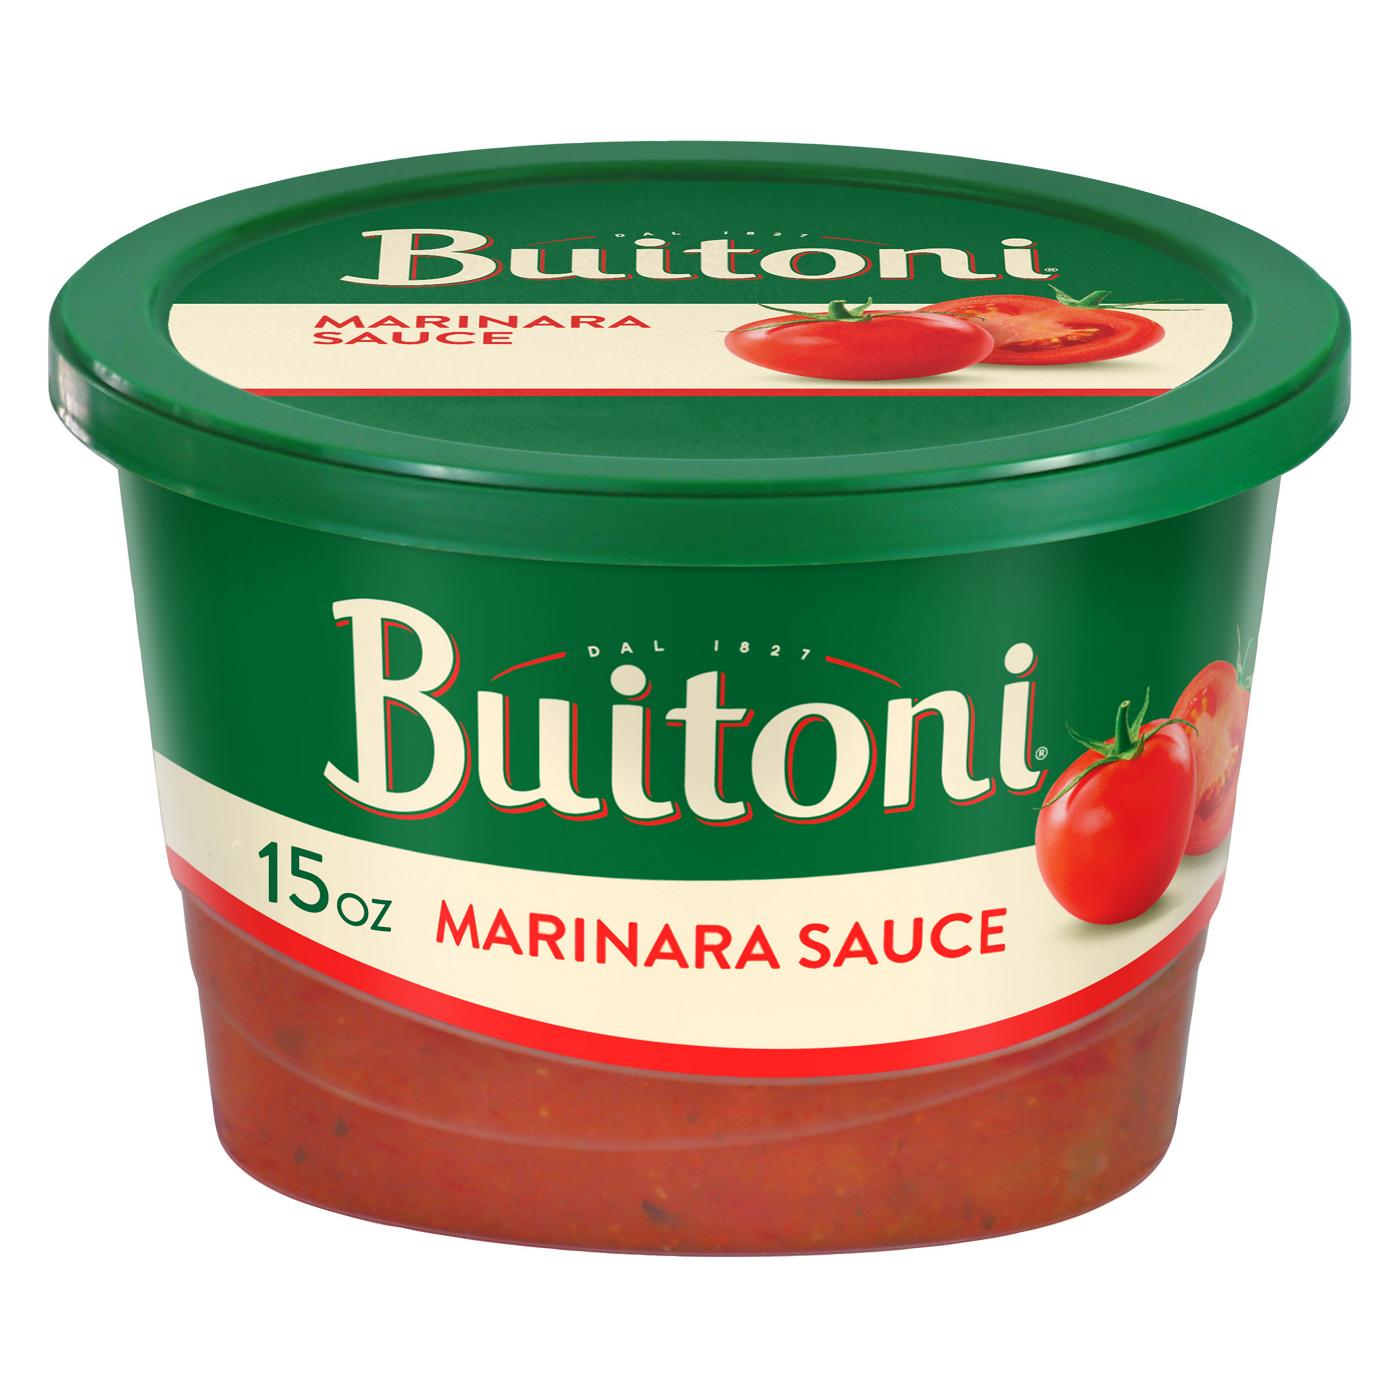 Buitoni Marinara Sauce; image 1 of 9